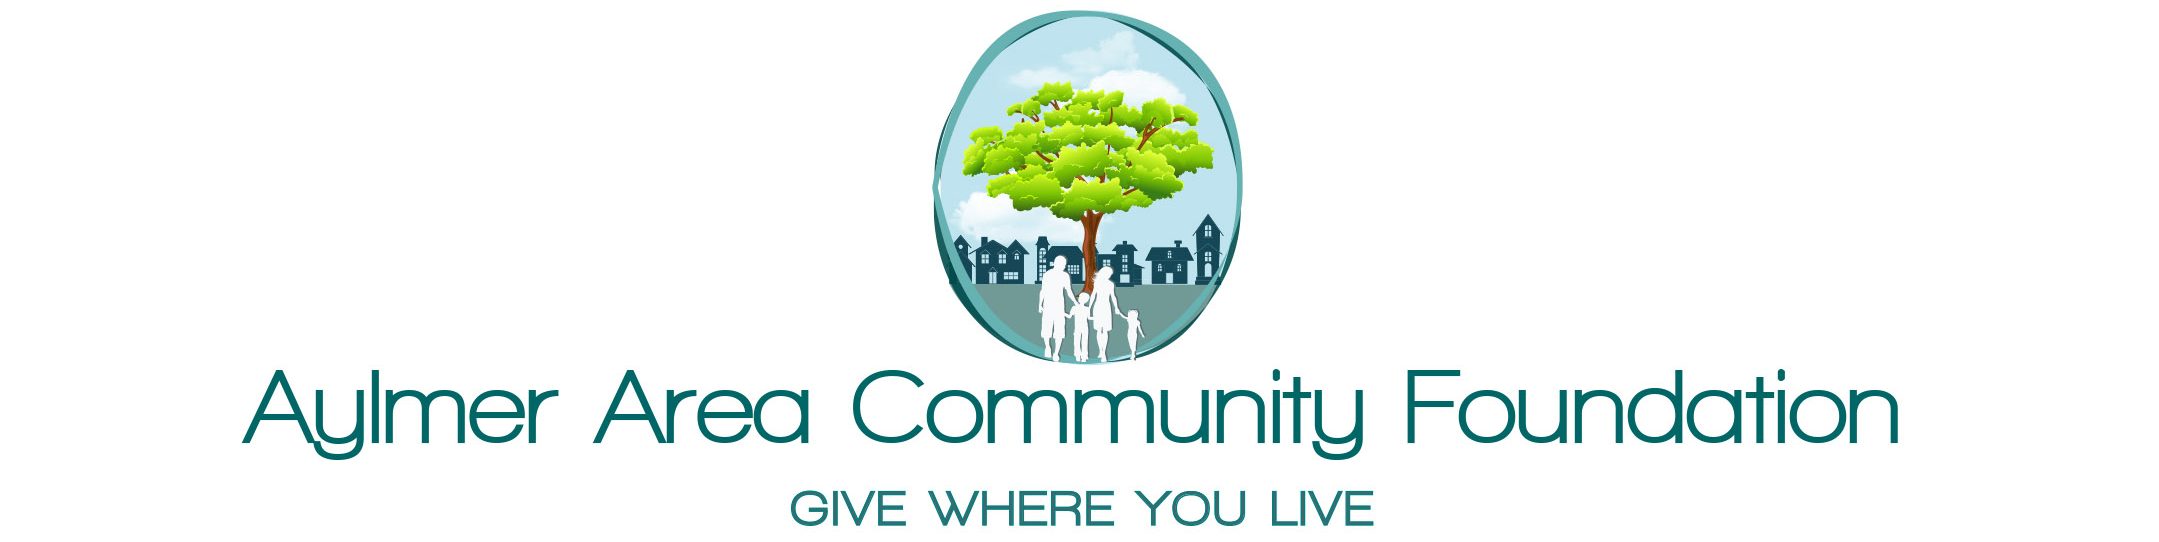 Aylmer Area Community Foundation